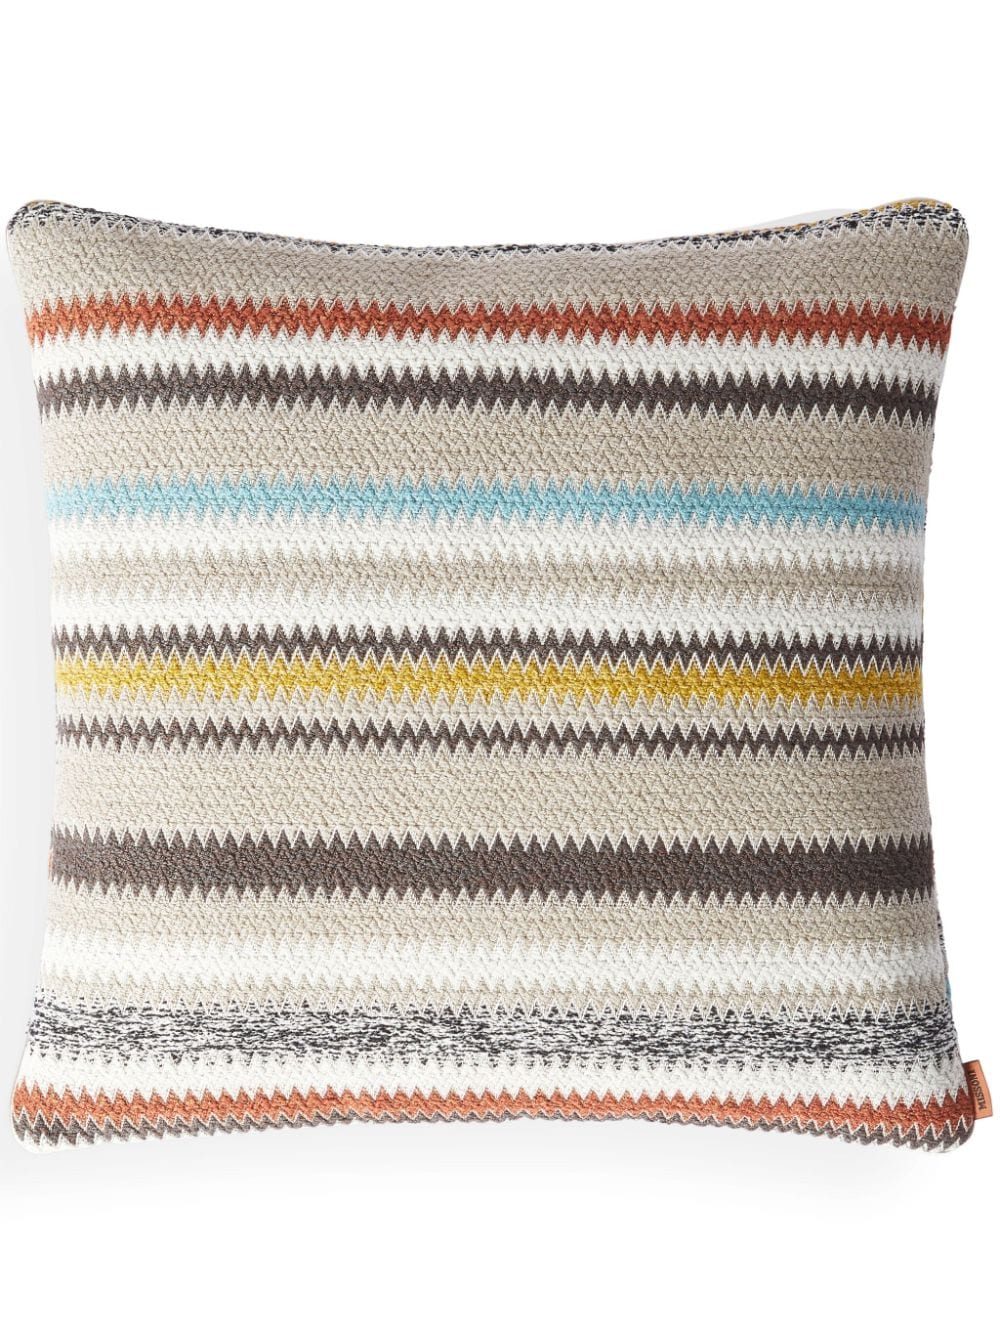 Missoni Home Blurred zigzag cushion (40cm x 40cm) - Neutrals von Missoni Home